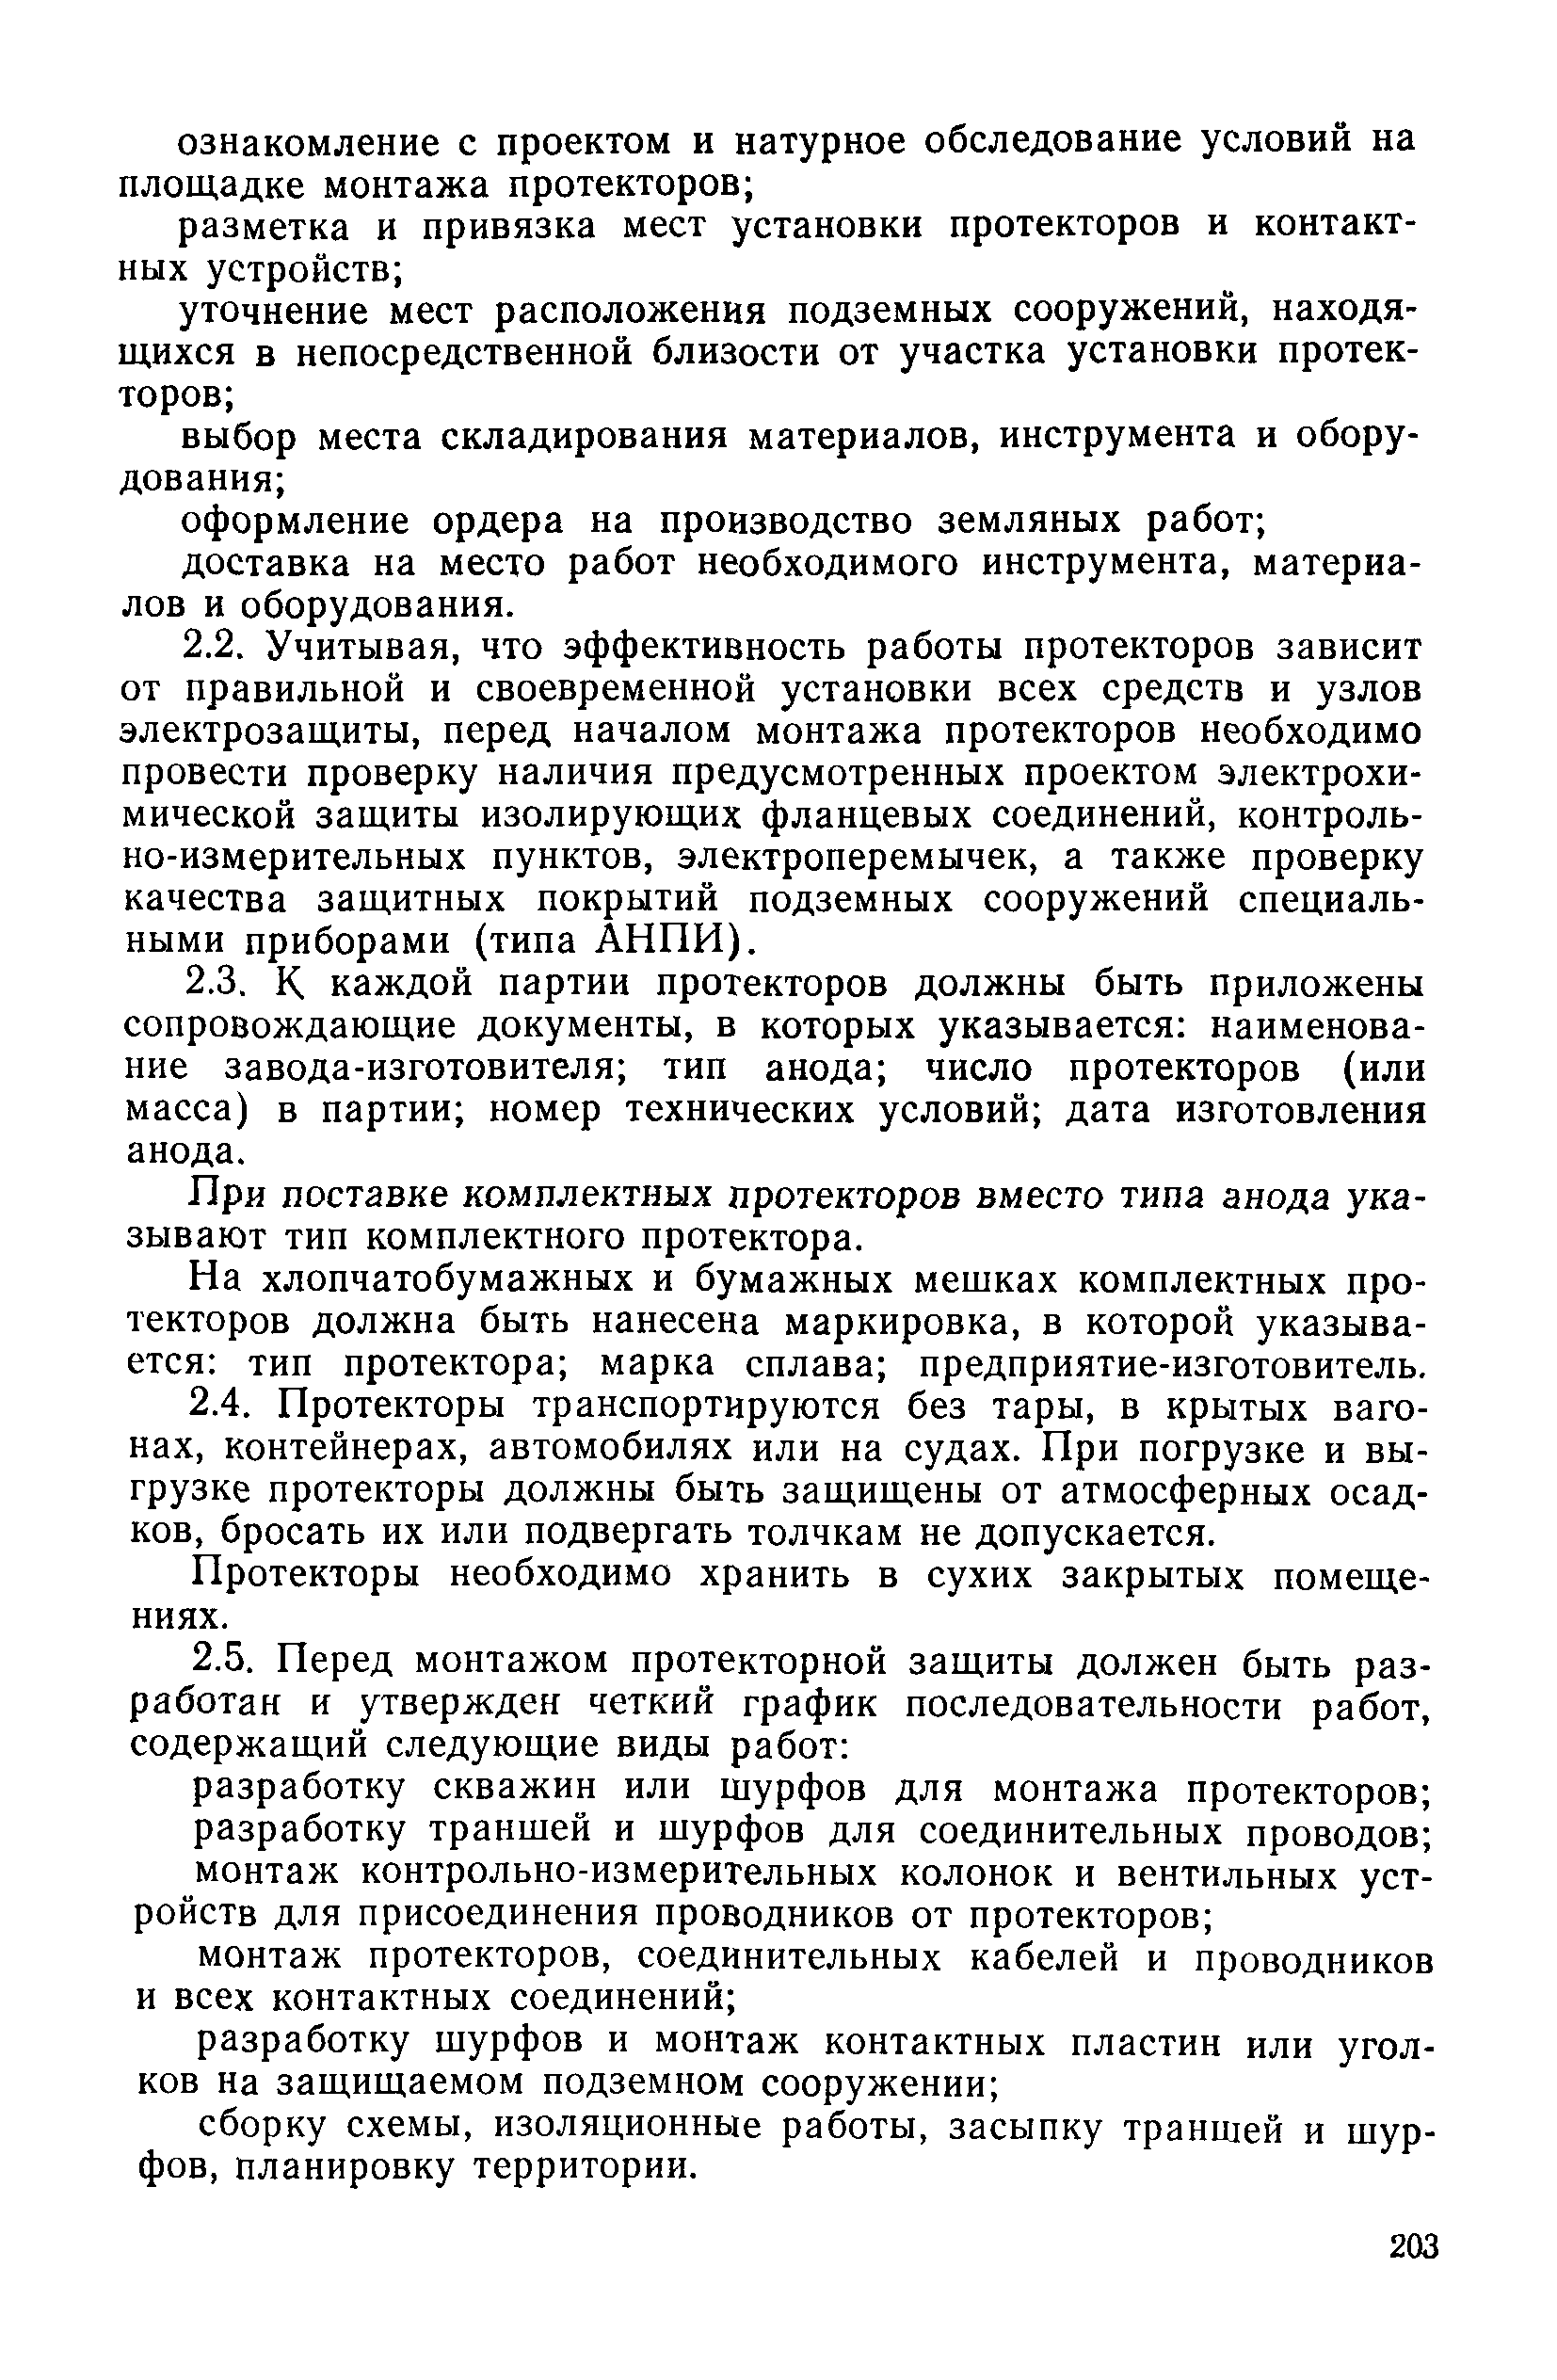 РДИ 204 РСФСР 3.11-82